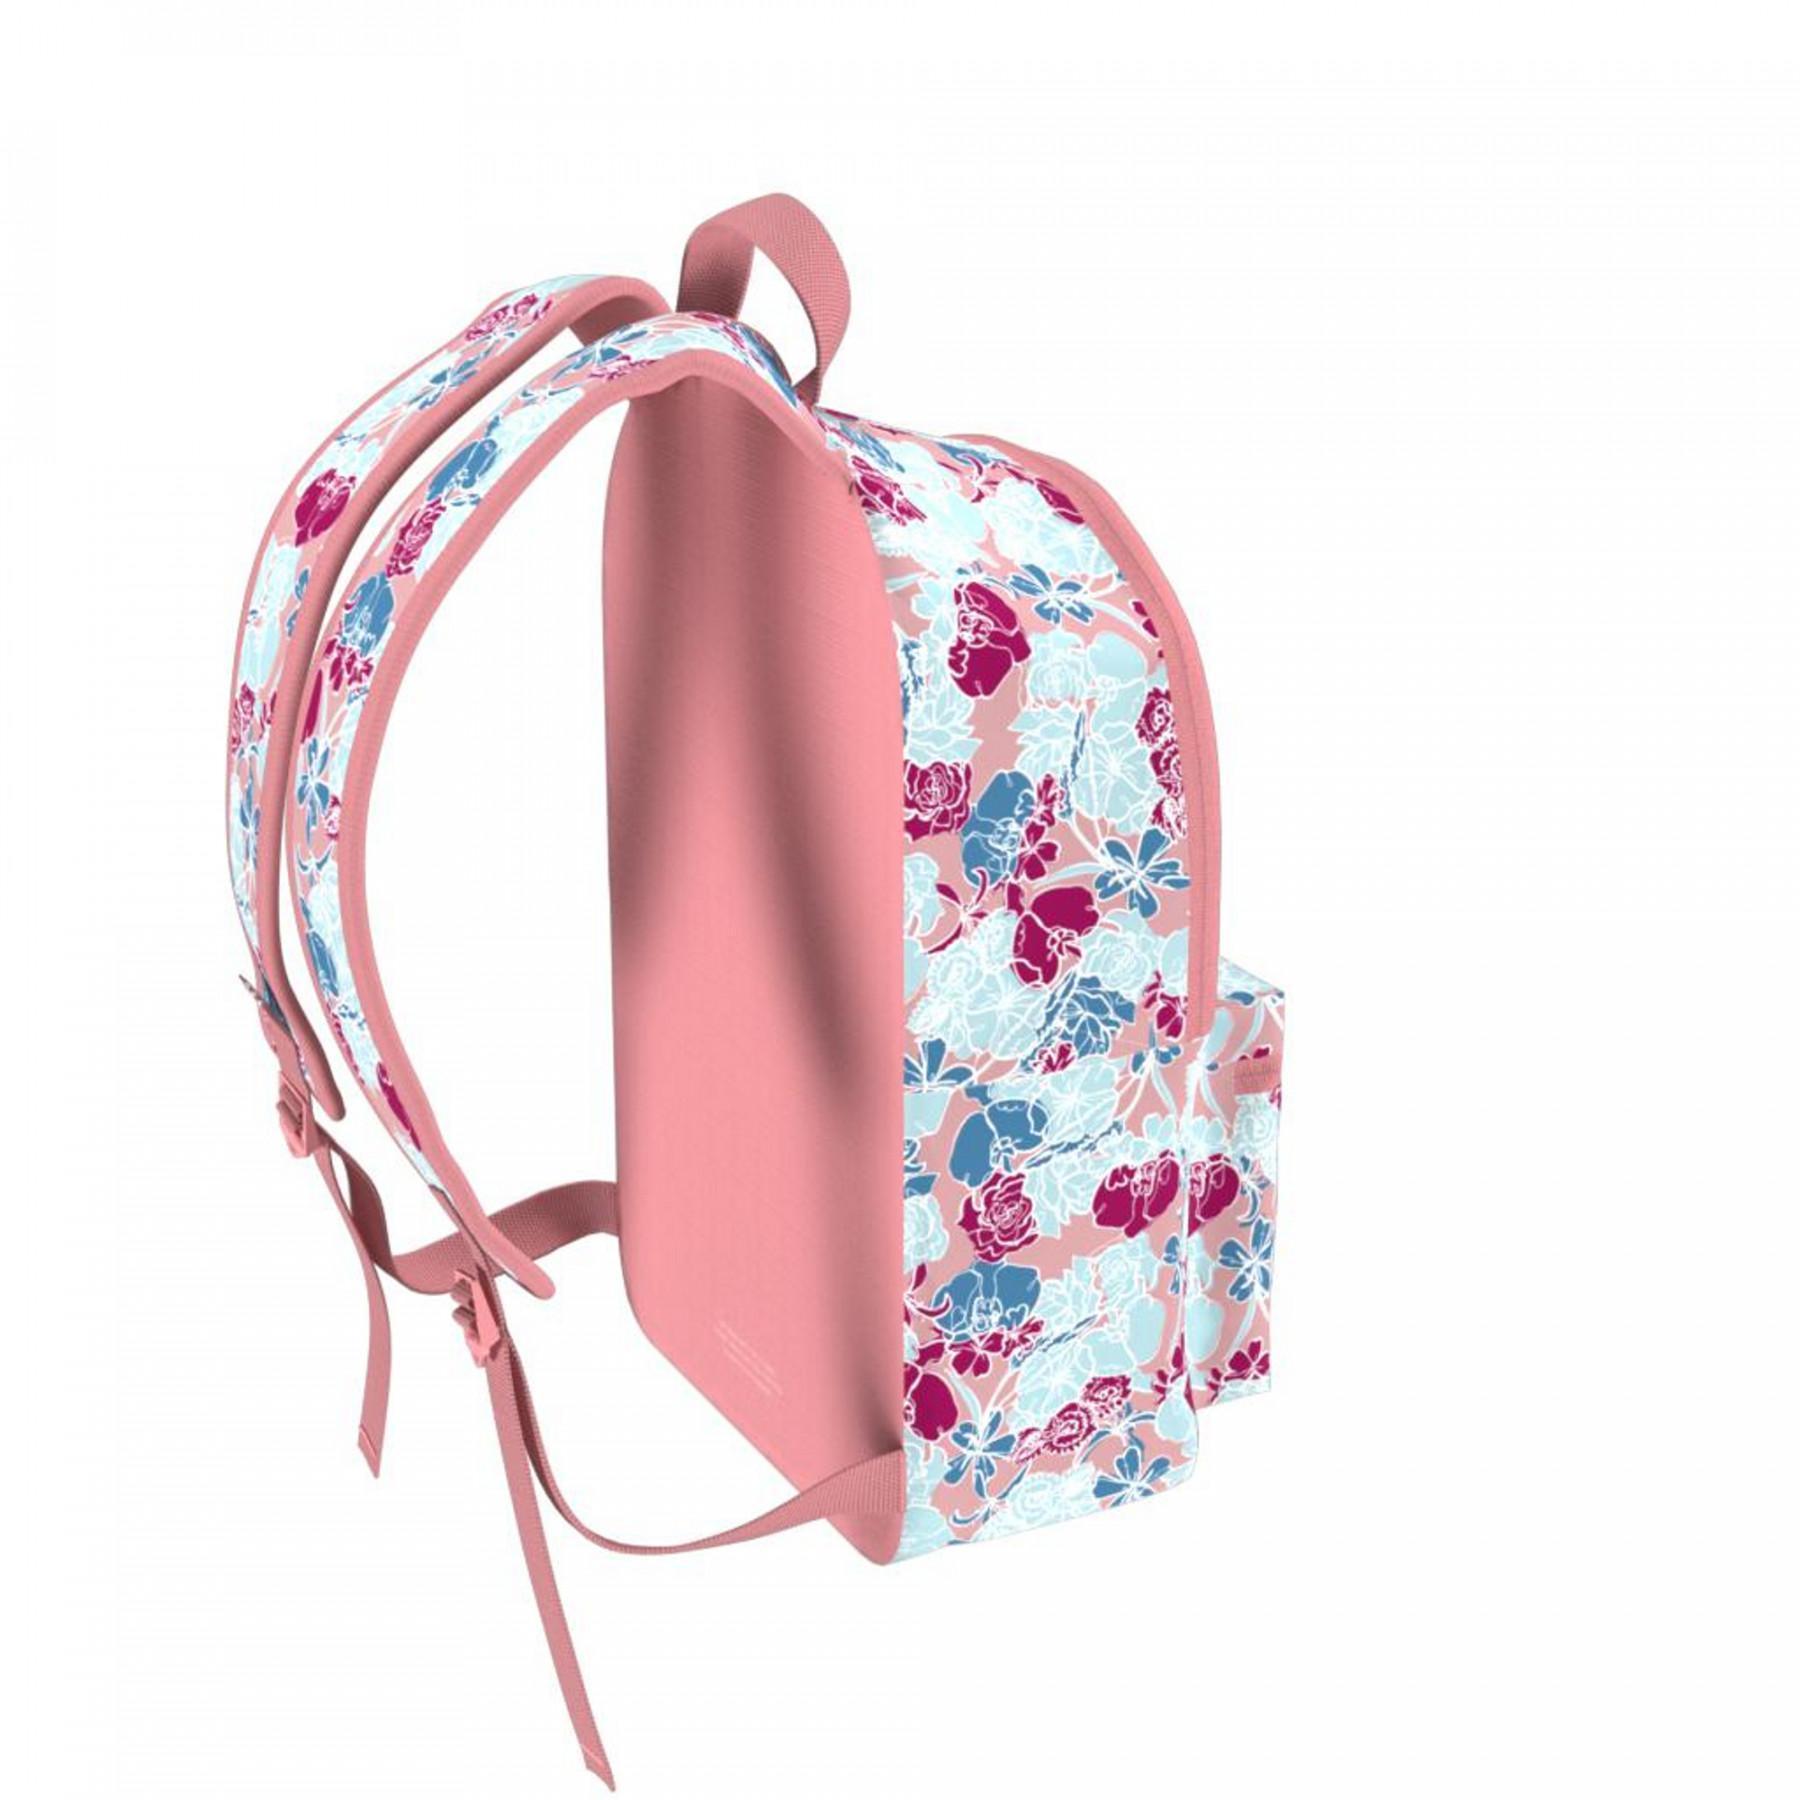 Women's backpack adidas Originals Flower